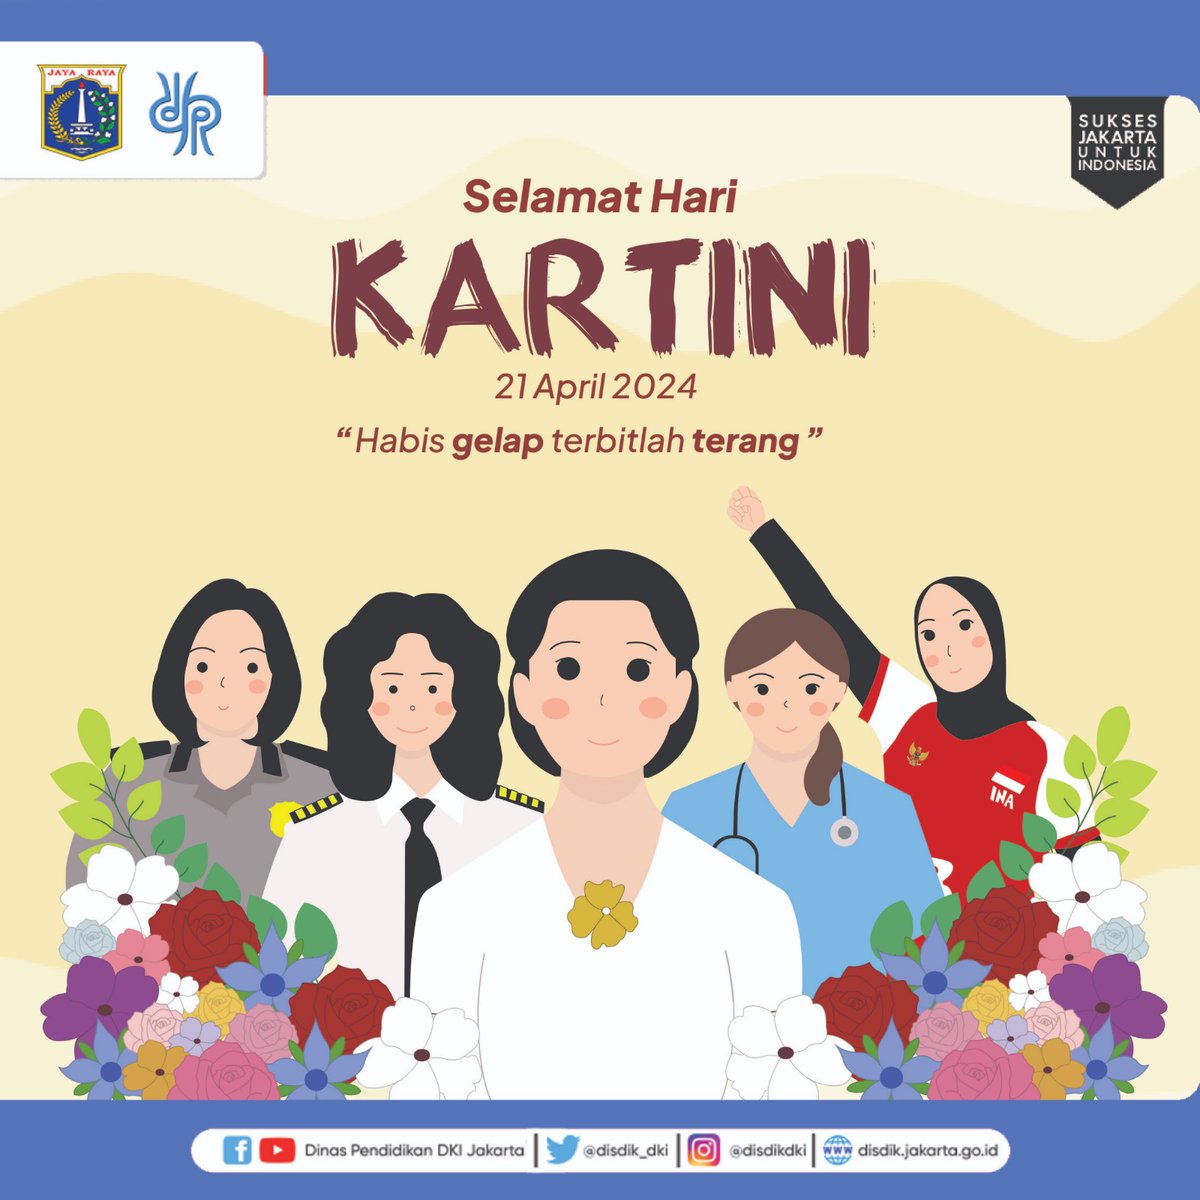 Selamat Hari Kartini untuk seluruh wanita Indonesia Semoga semangat Ibu Kartini tidak pernah padam di jiwa kita semua. Seperti kutipannya 'Marilah wahai perempuan, gadis. Bangkitlah, marilah kita berjabatan tangan dan bersama-sama mengubah keadaan' instagram.com/p/C6AmGCxvxfu/…